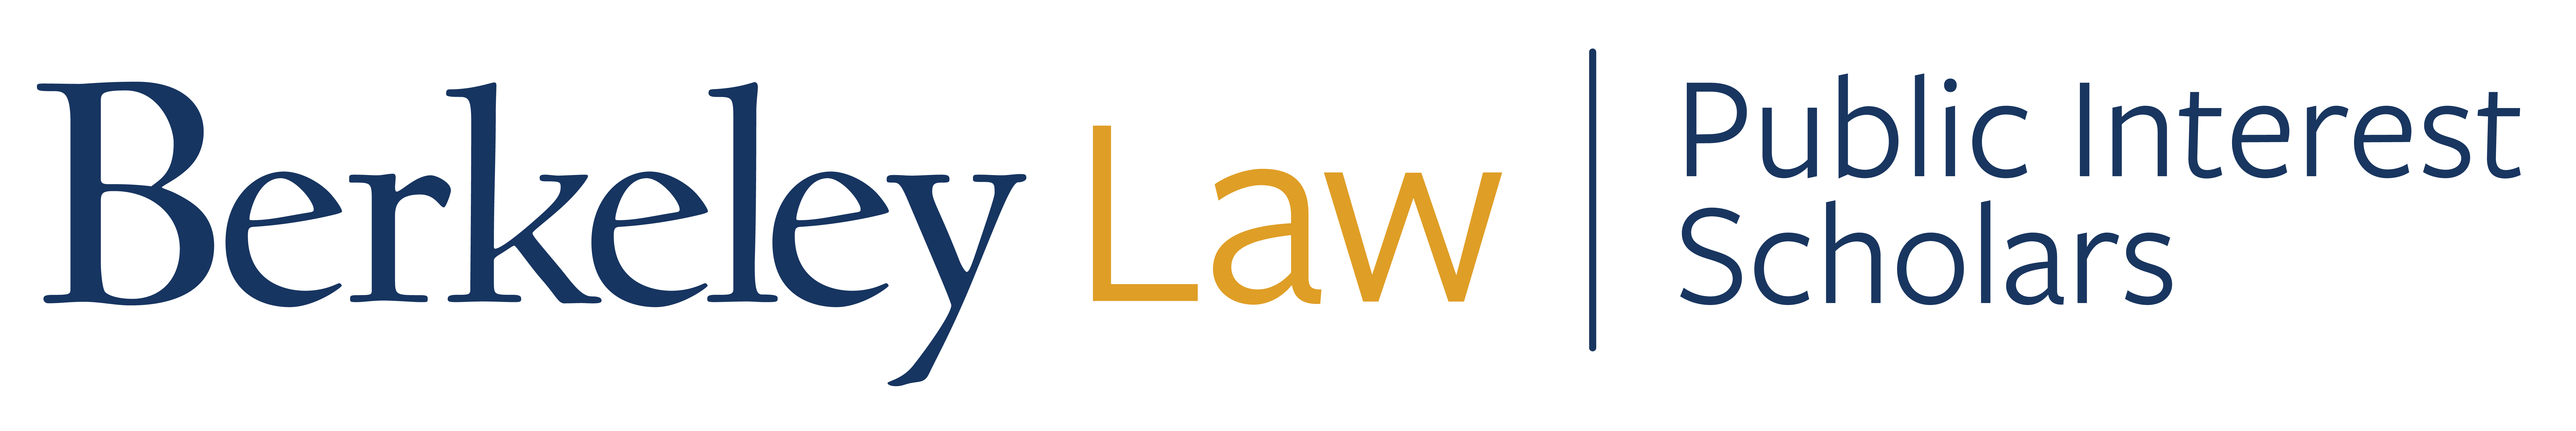 Berkeley Law Public Interest Scholars logo